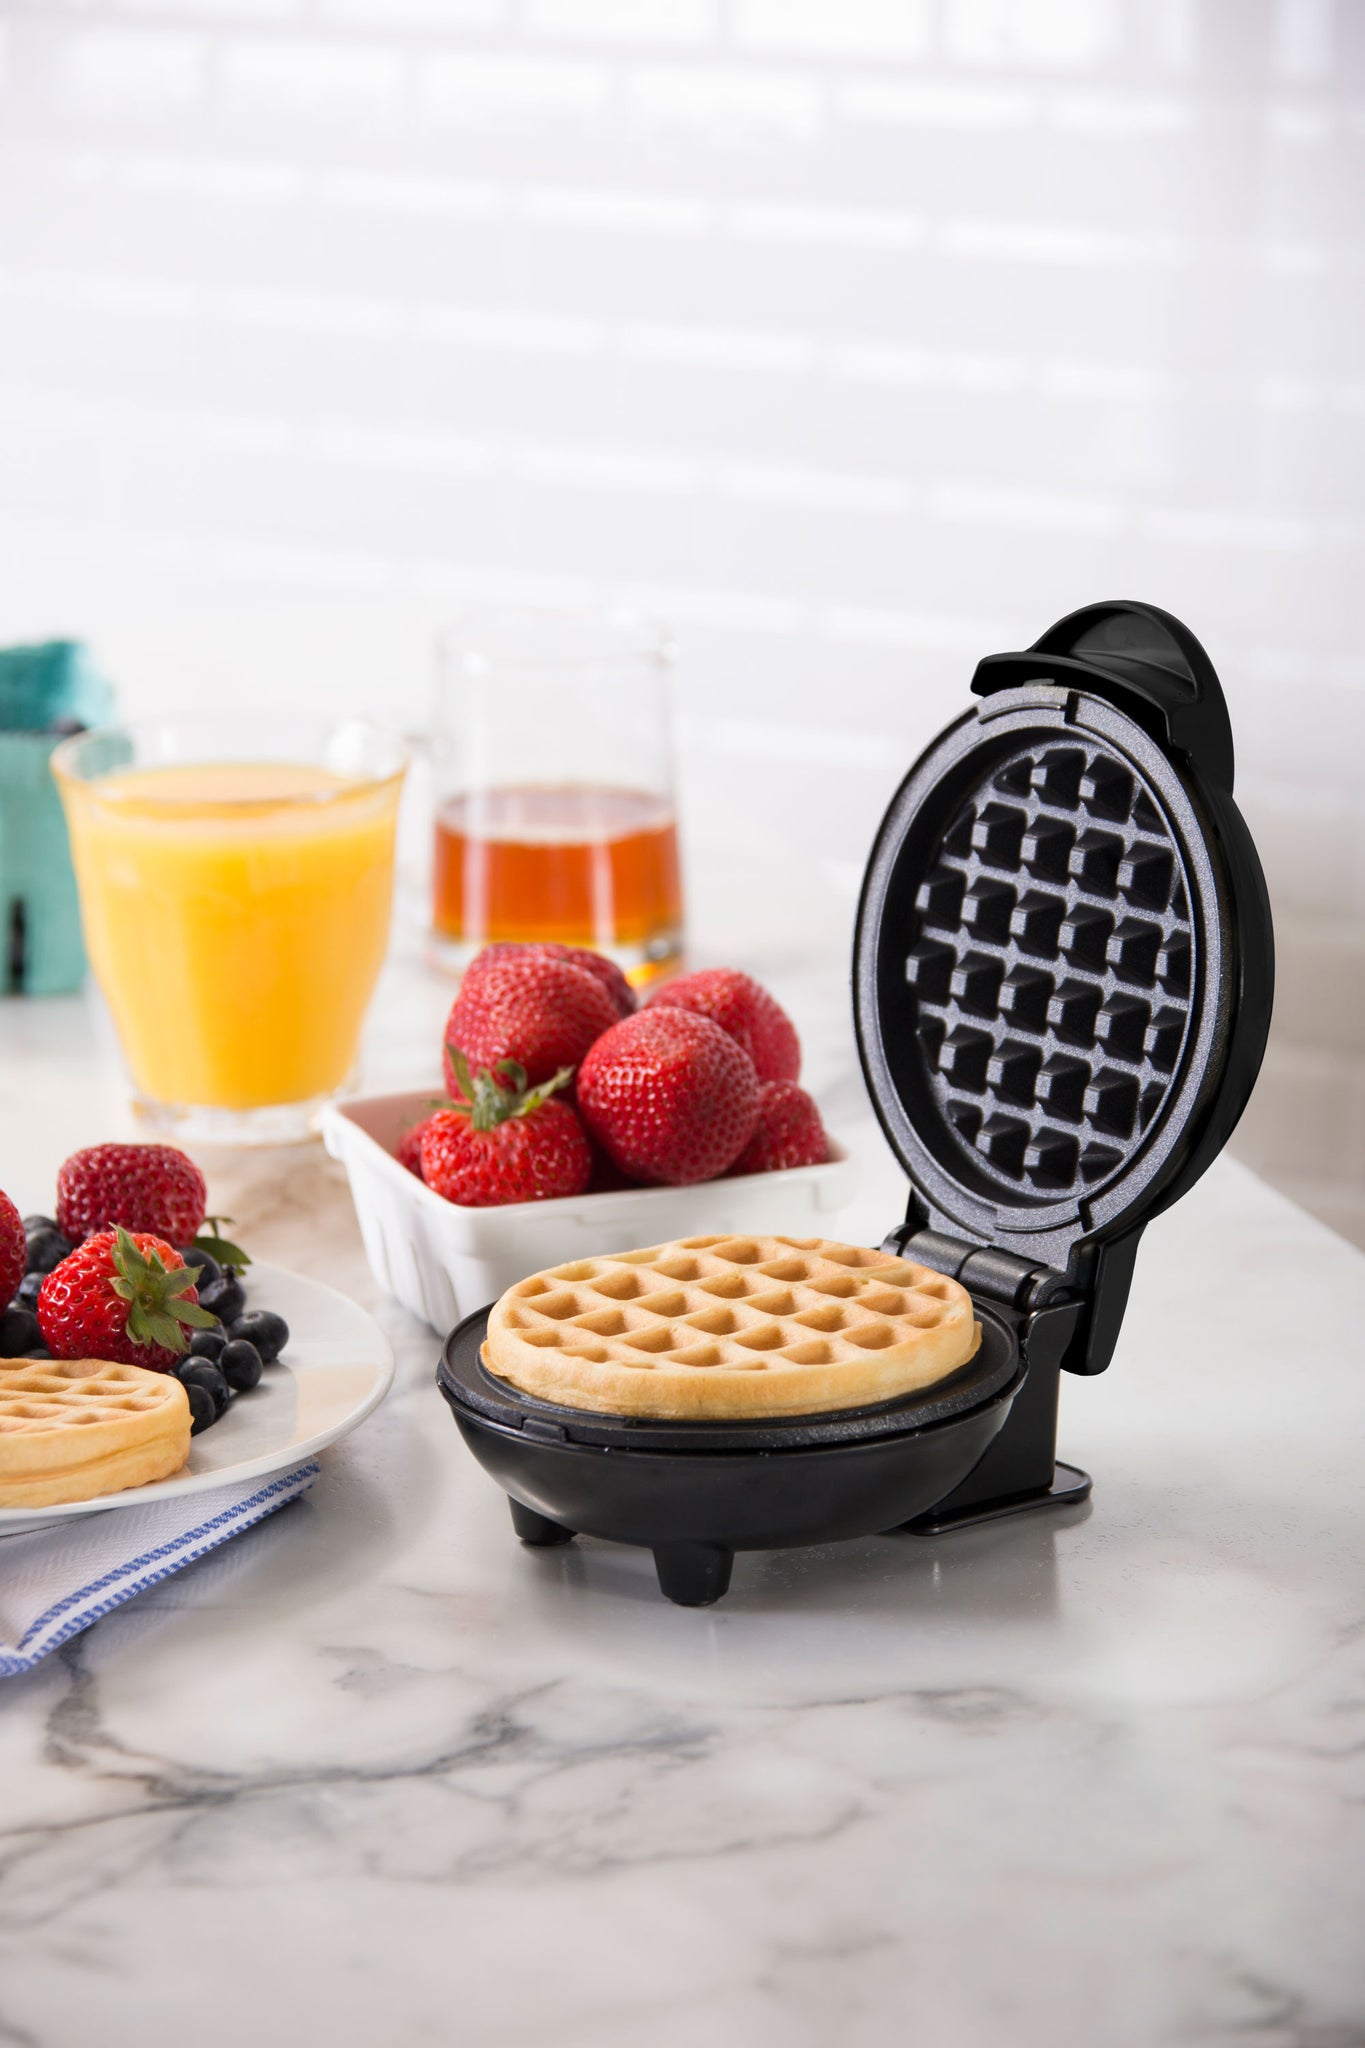 Dash Mini Waffle Maker Machine for Individuals, Paninis, Hash